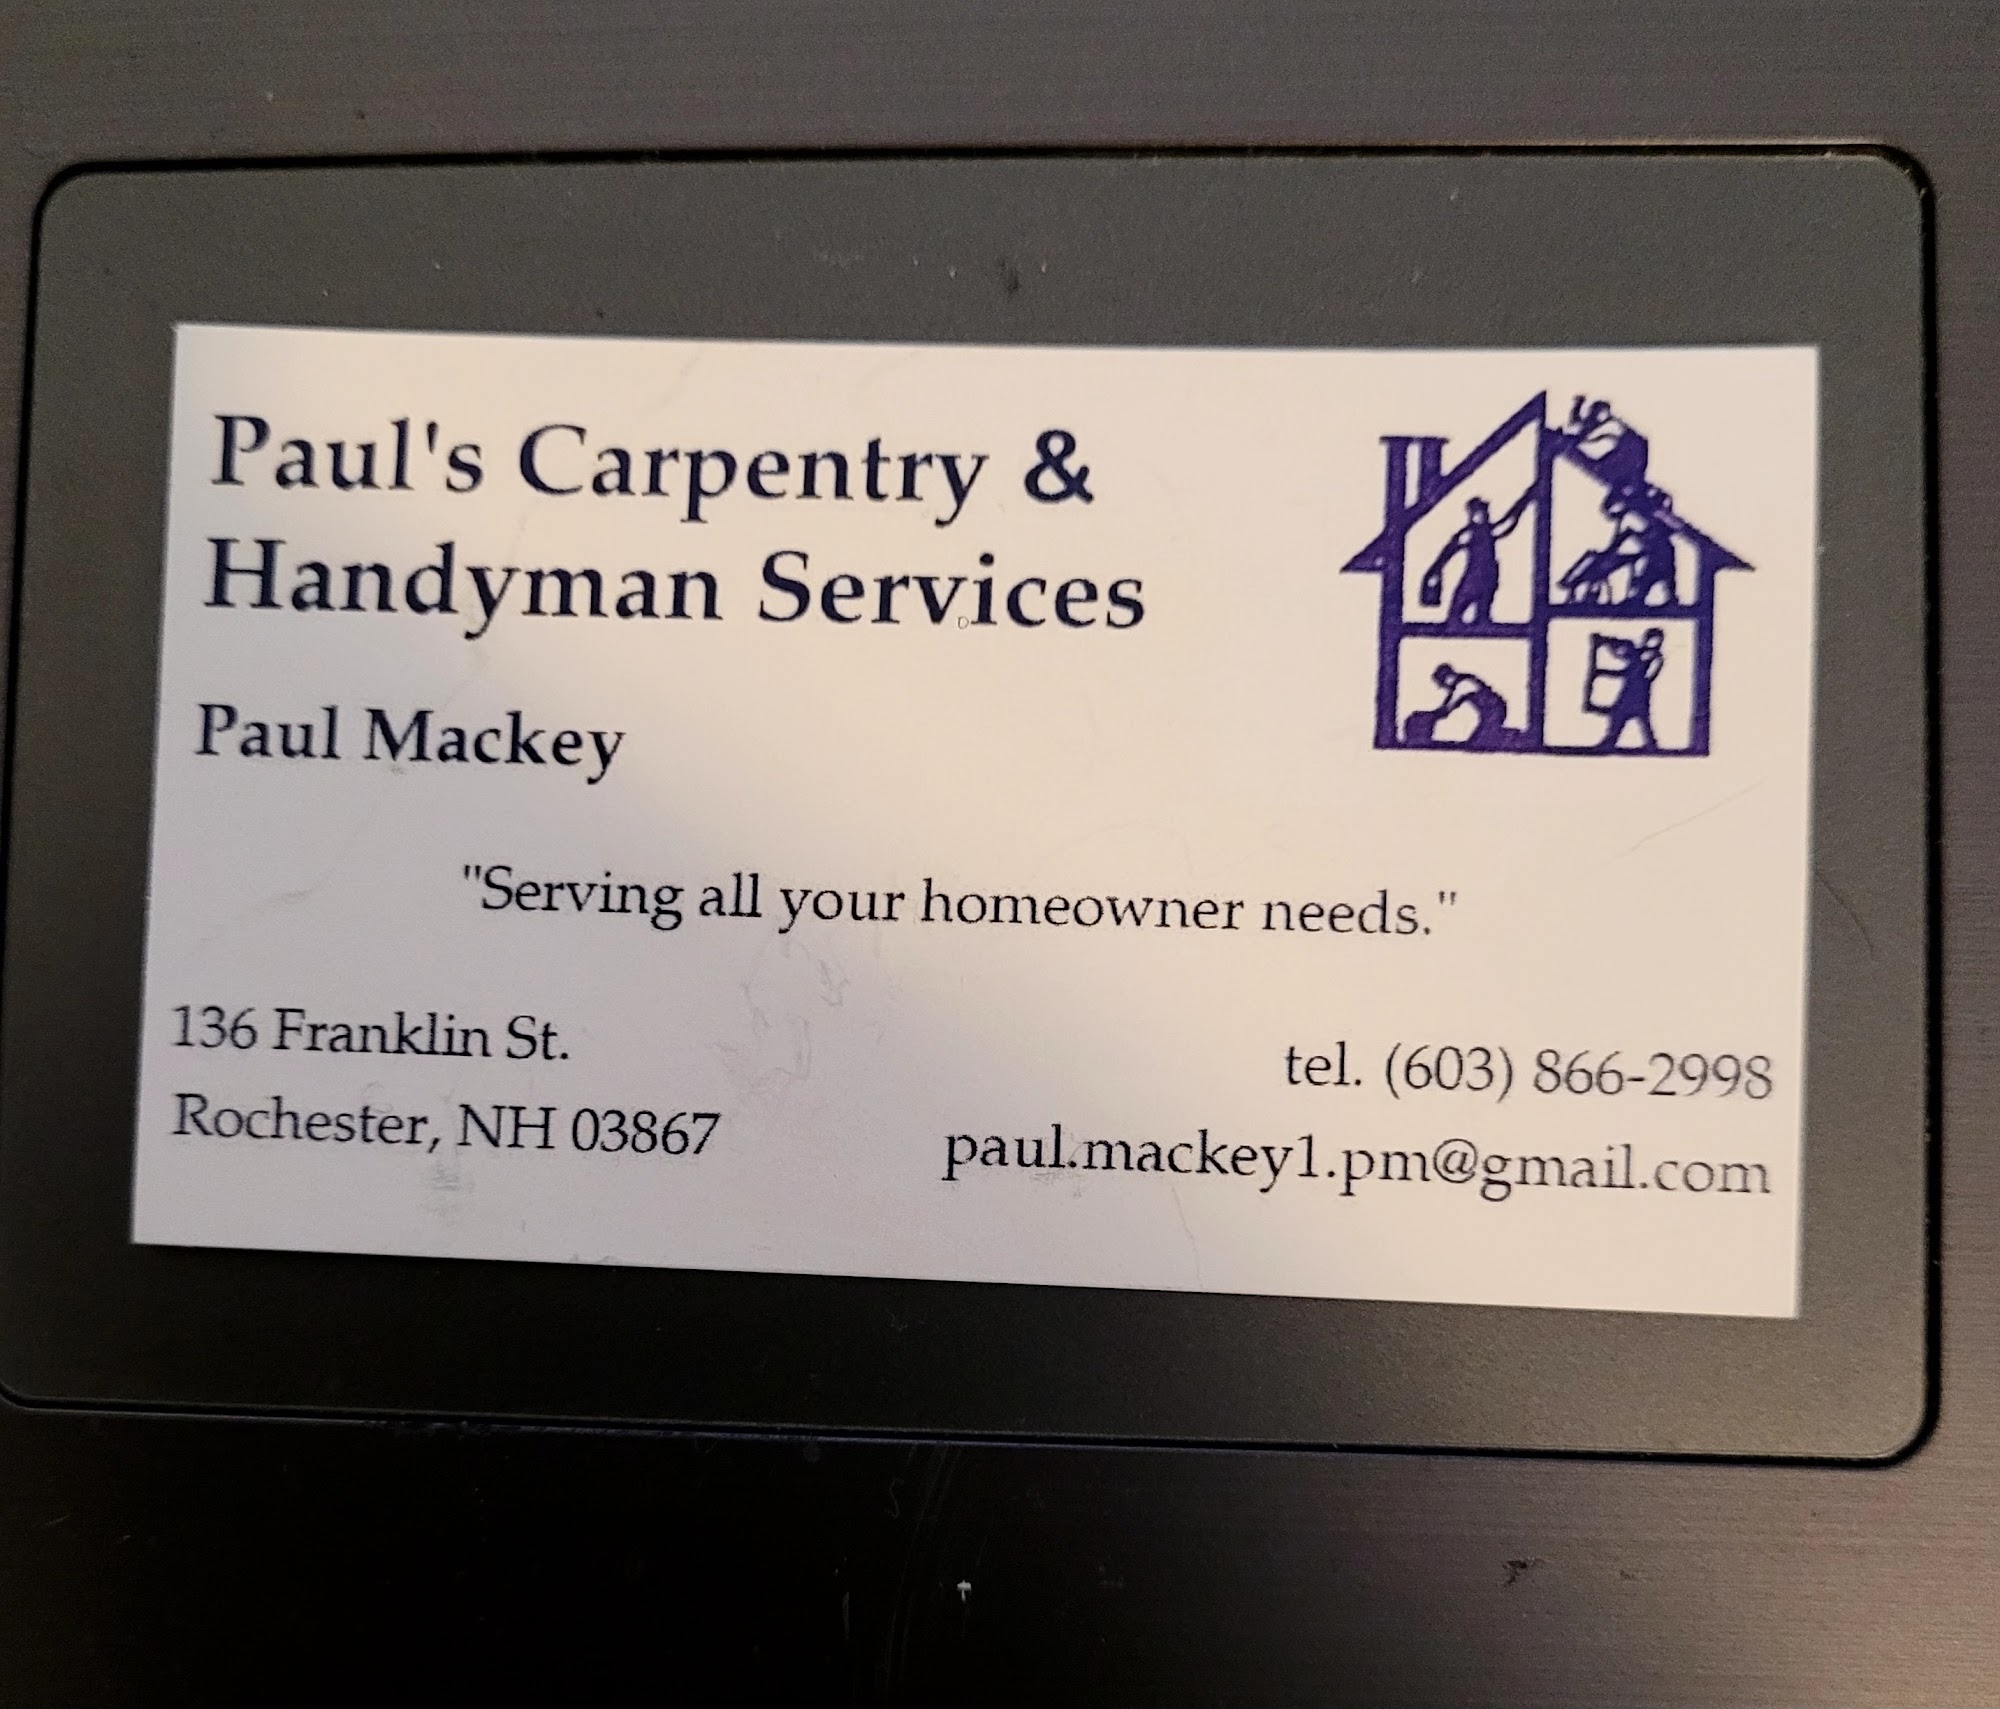 Paul's Carpentry & Handyman Services